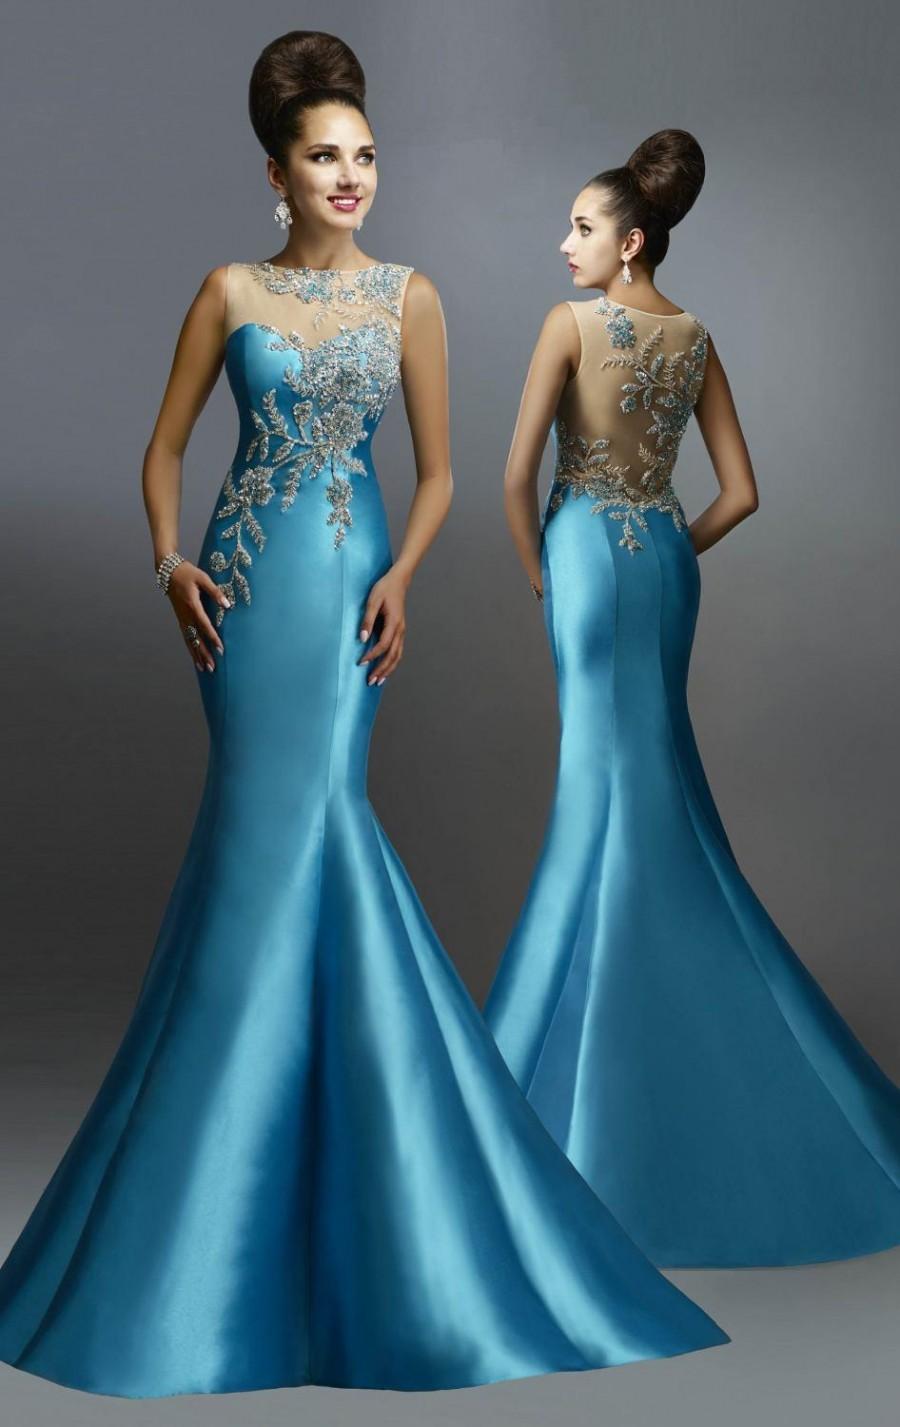 women's evening gown designers